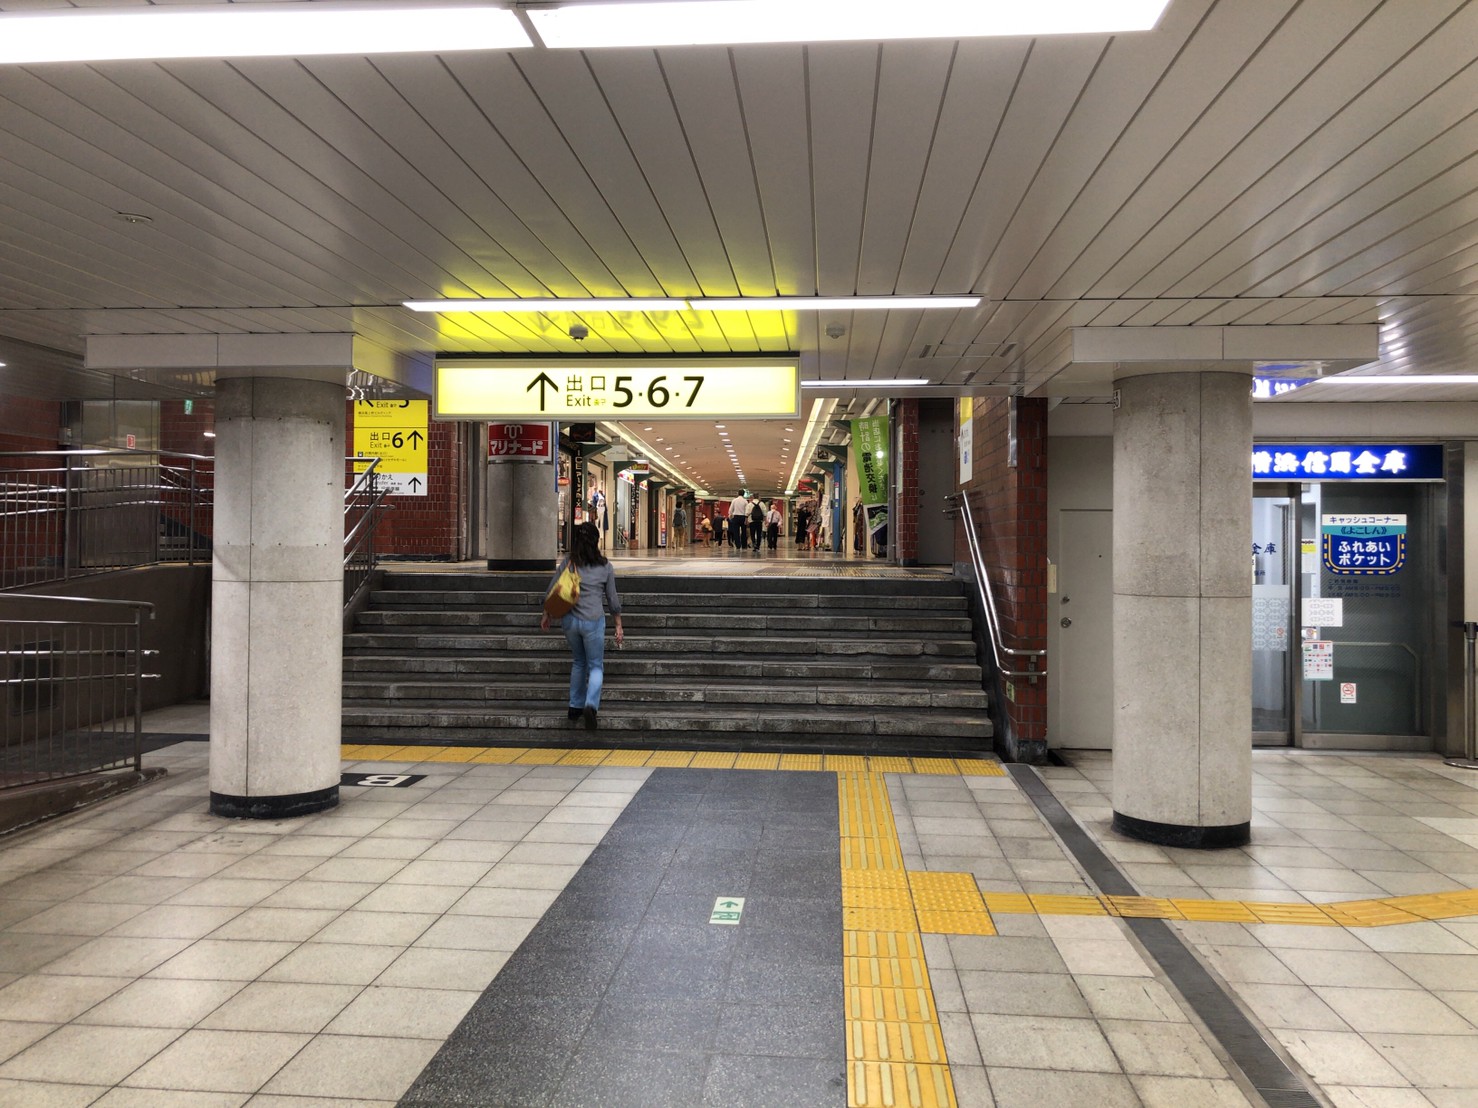 NAORU整体 横浜関内院のアクセス経路説明文の写真